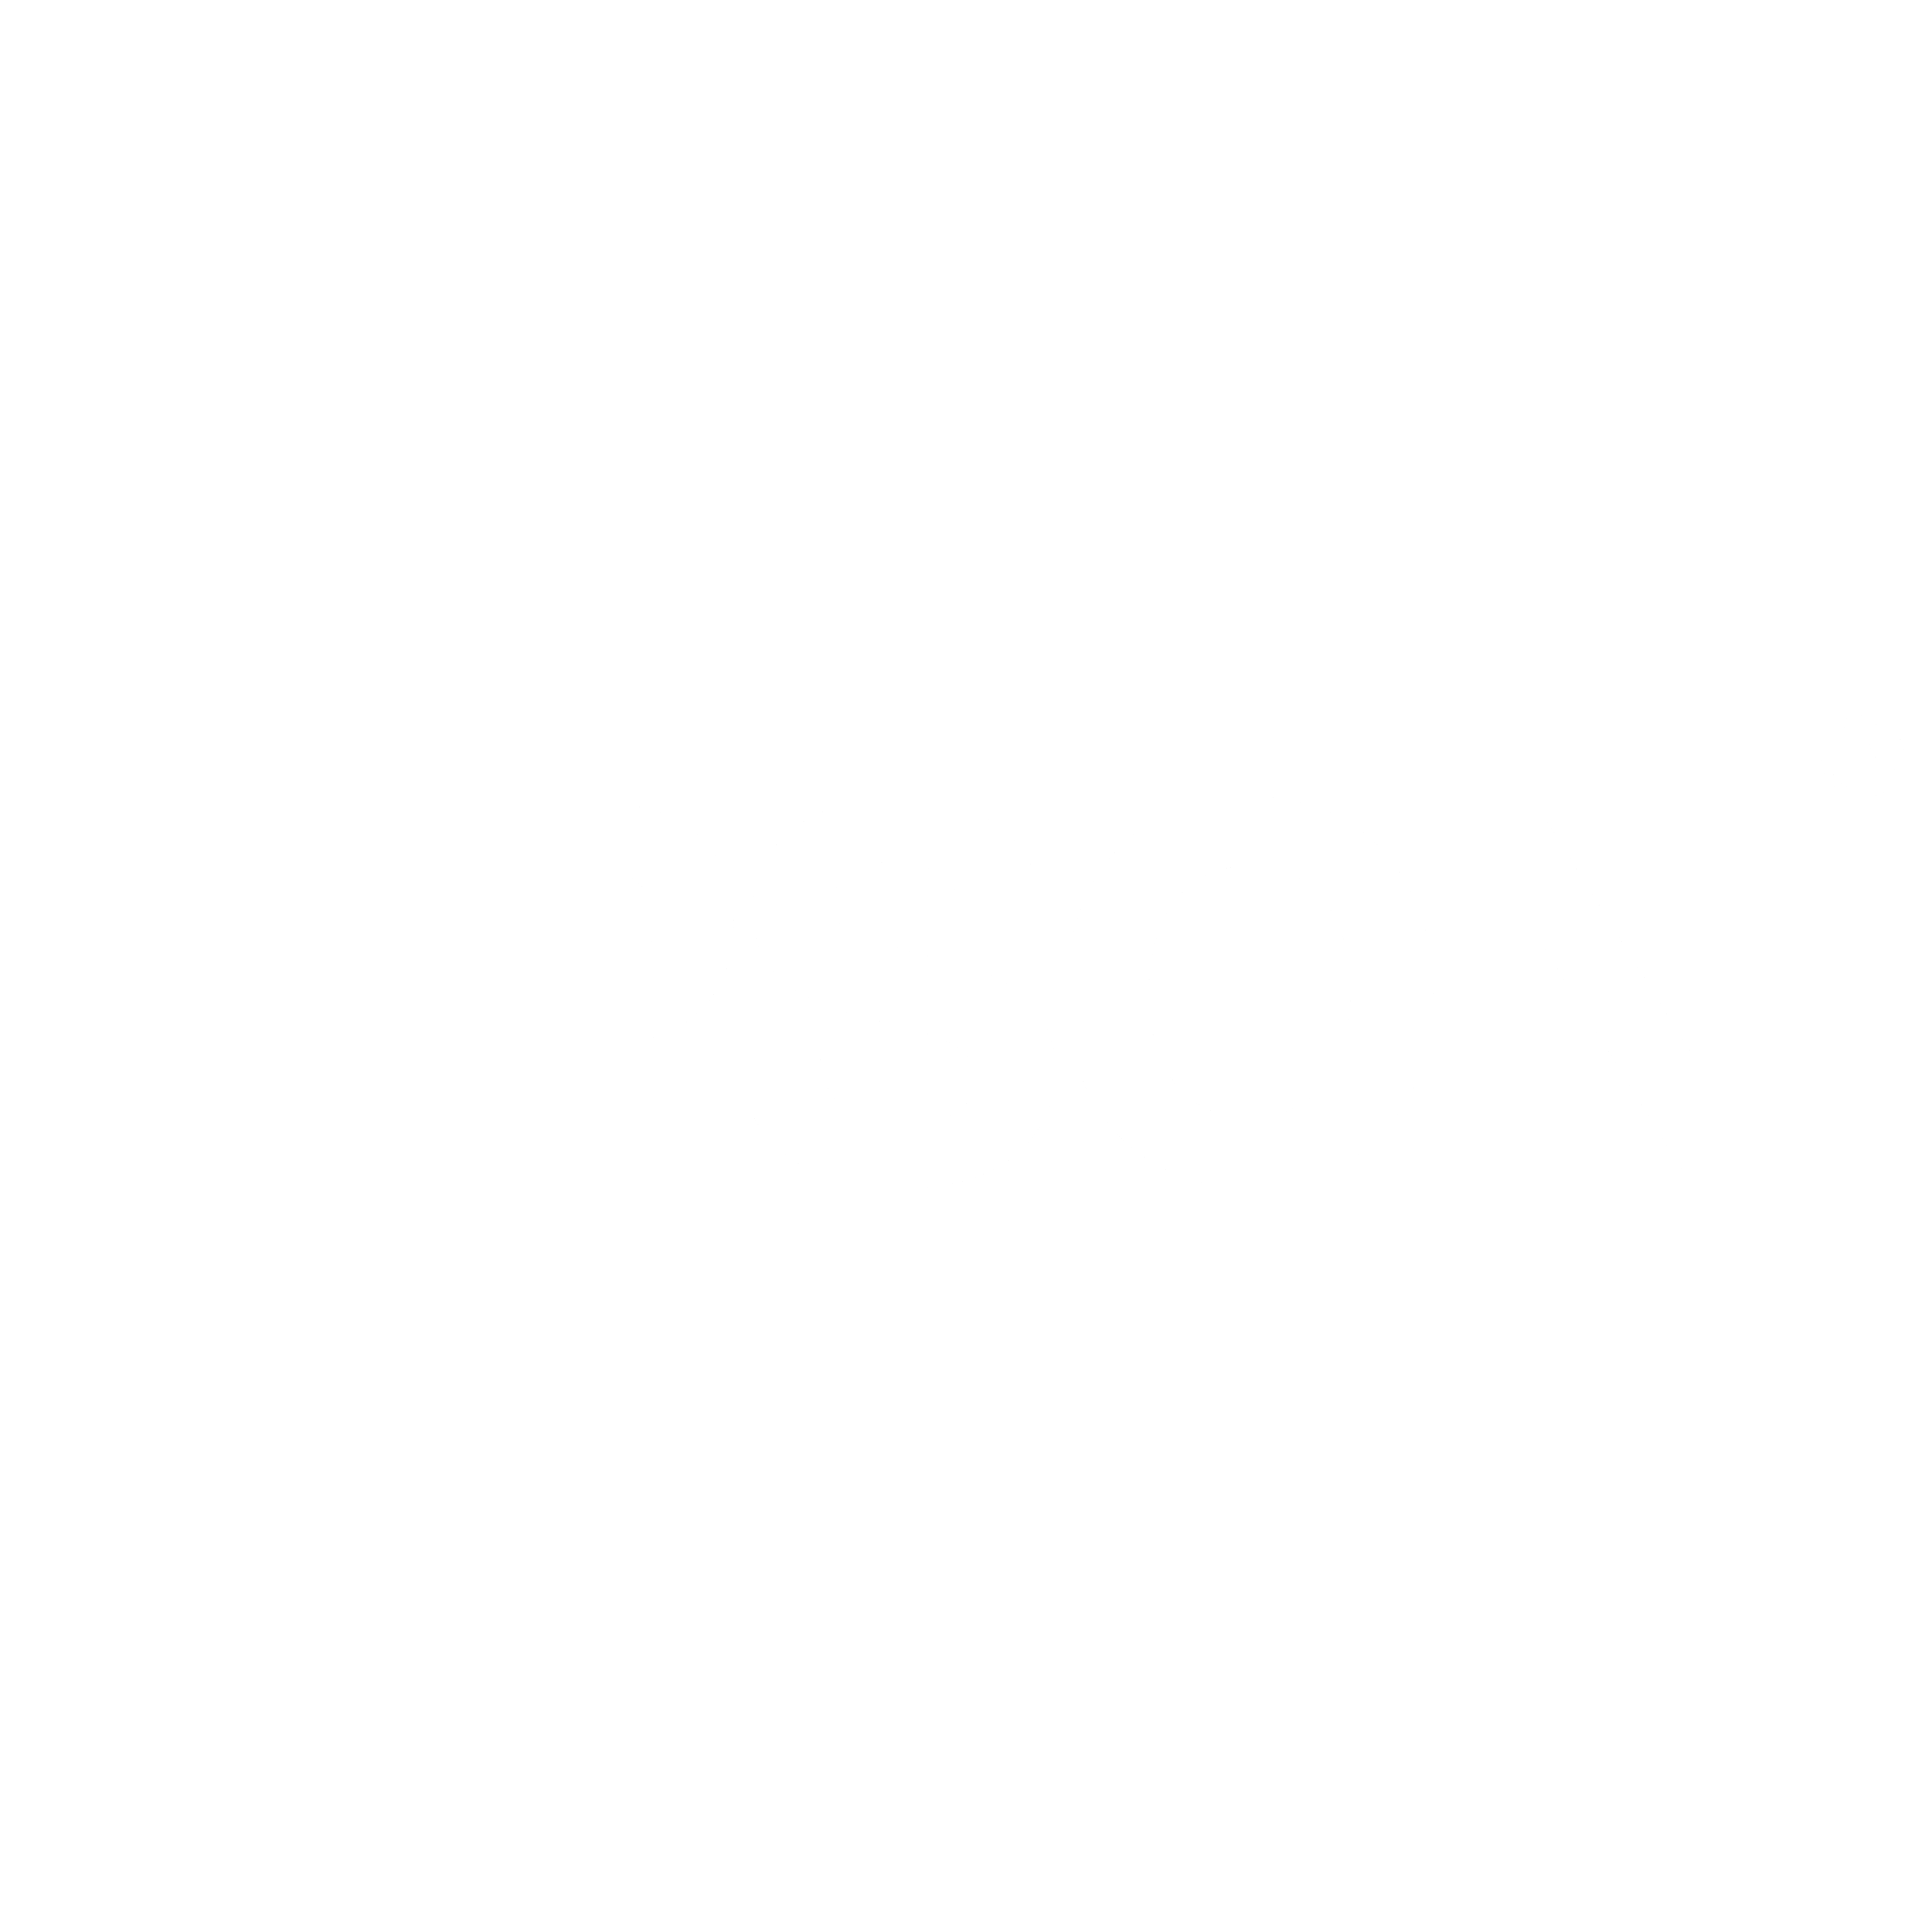 Epson Logo Vector (eps) Downl